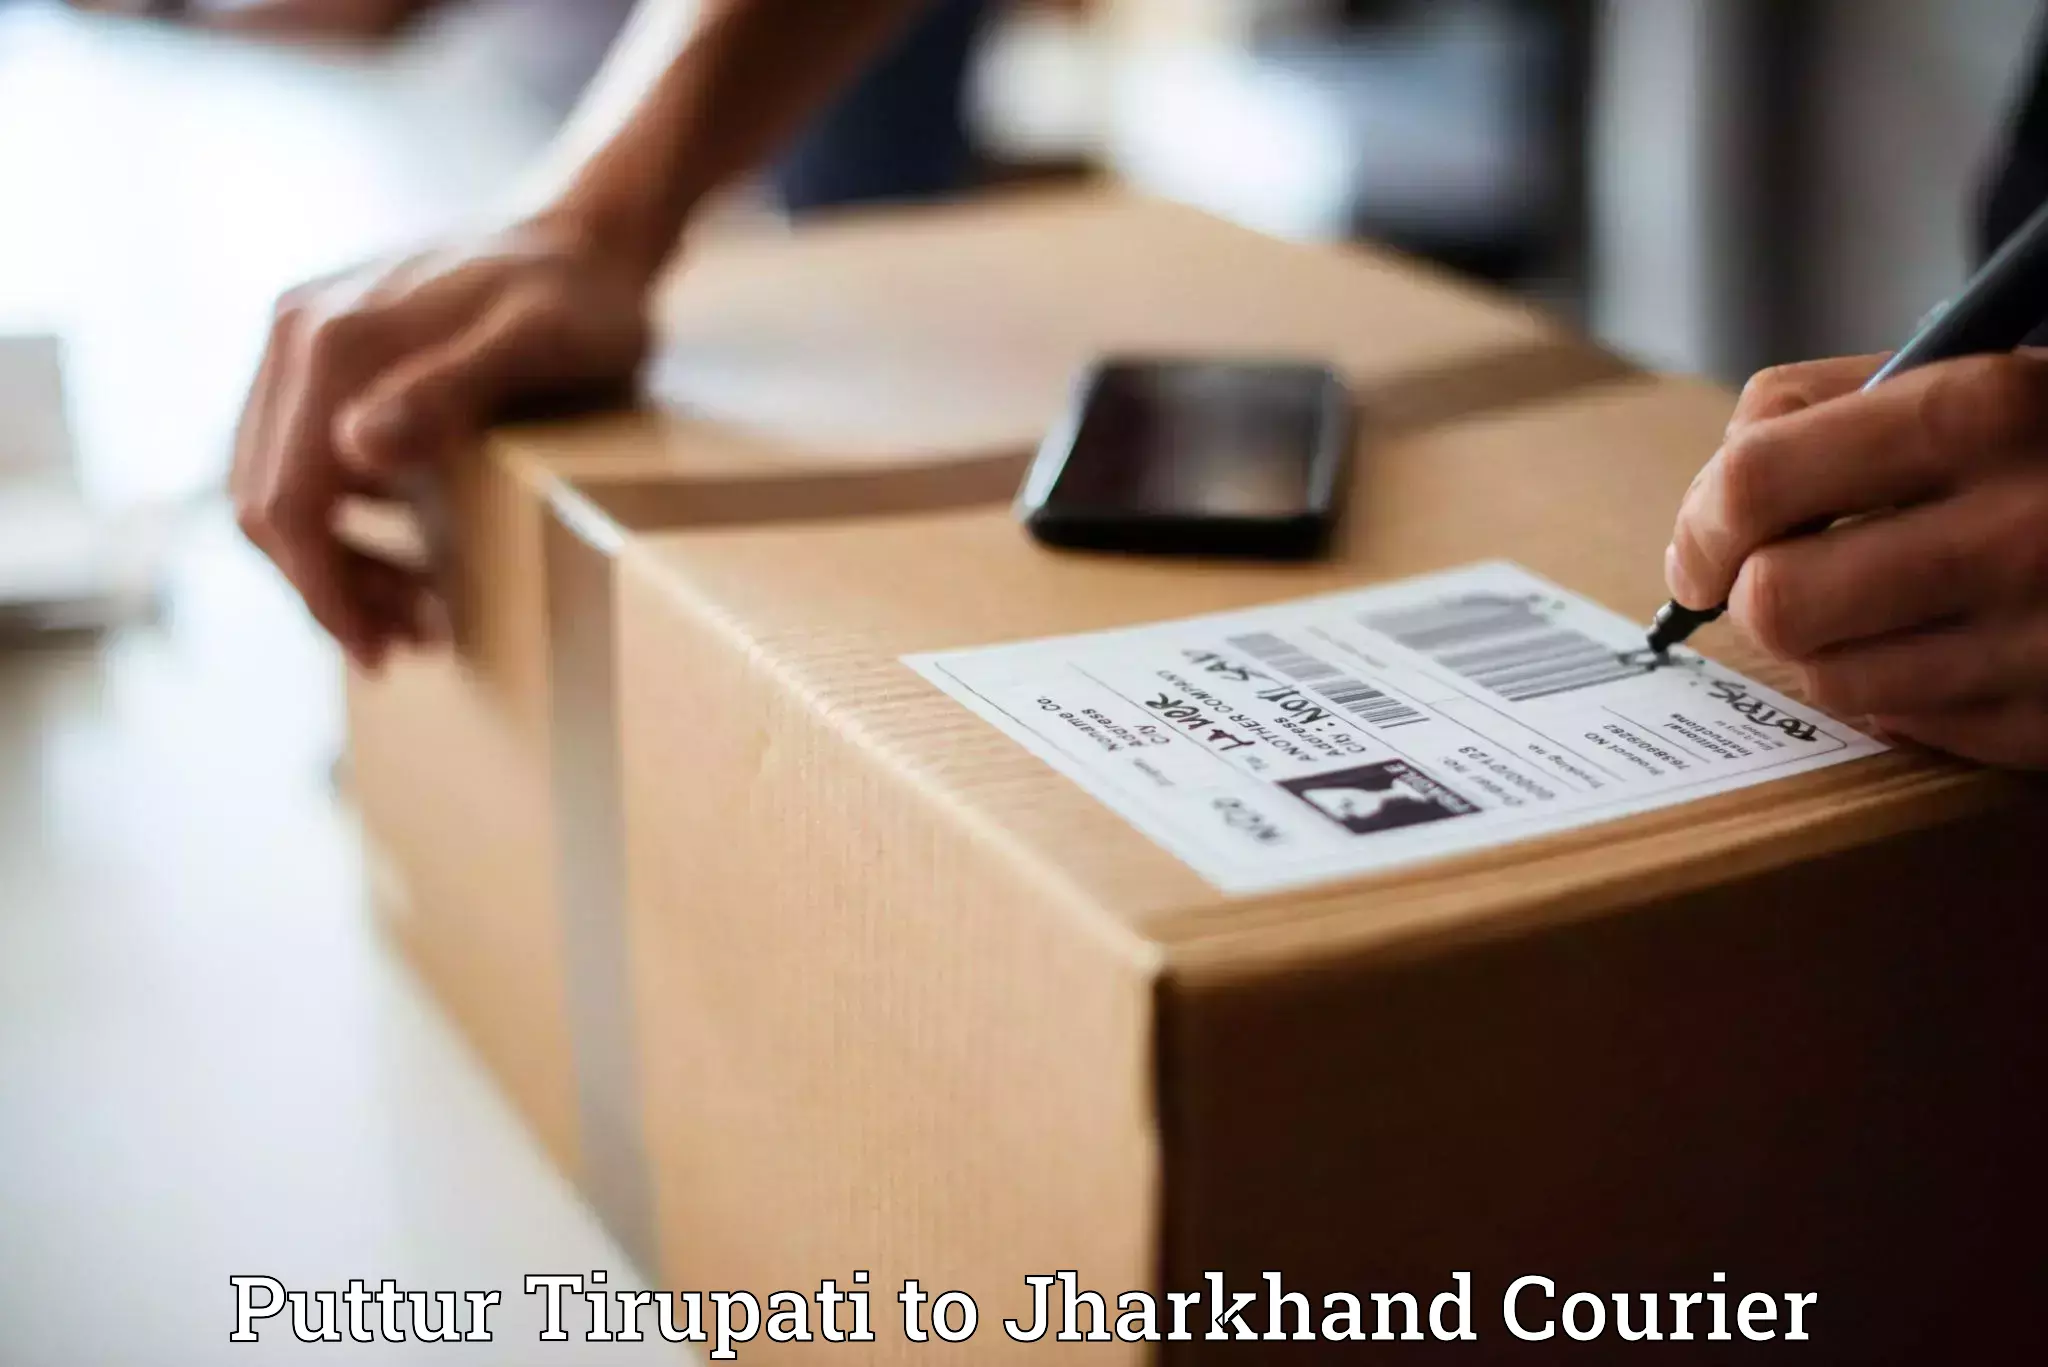 Courier service efficiency Puttur Tirupati to Bundu